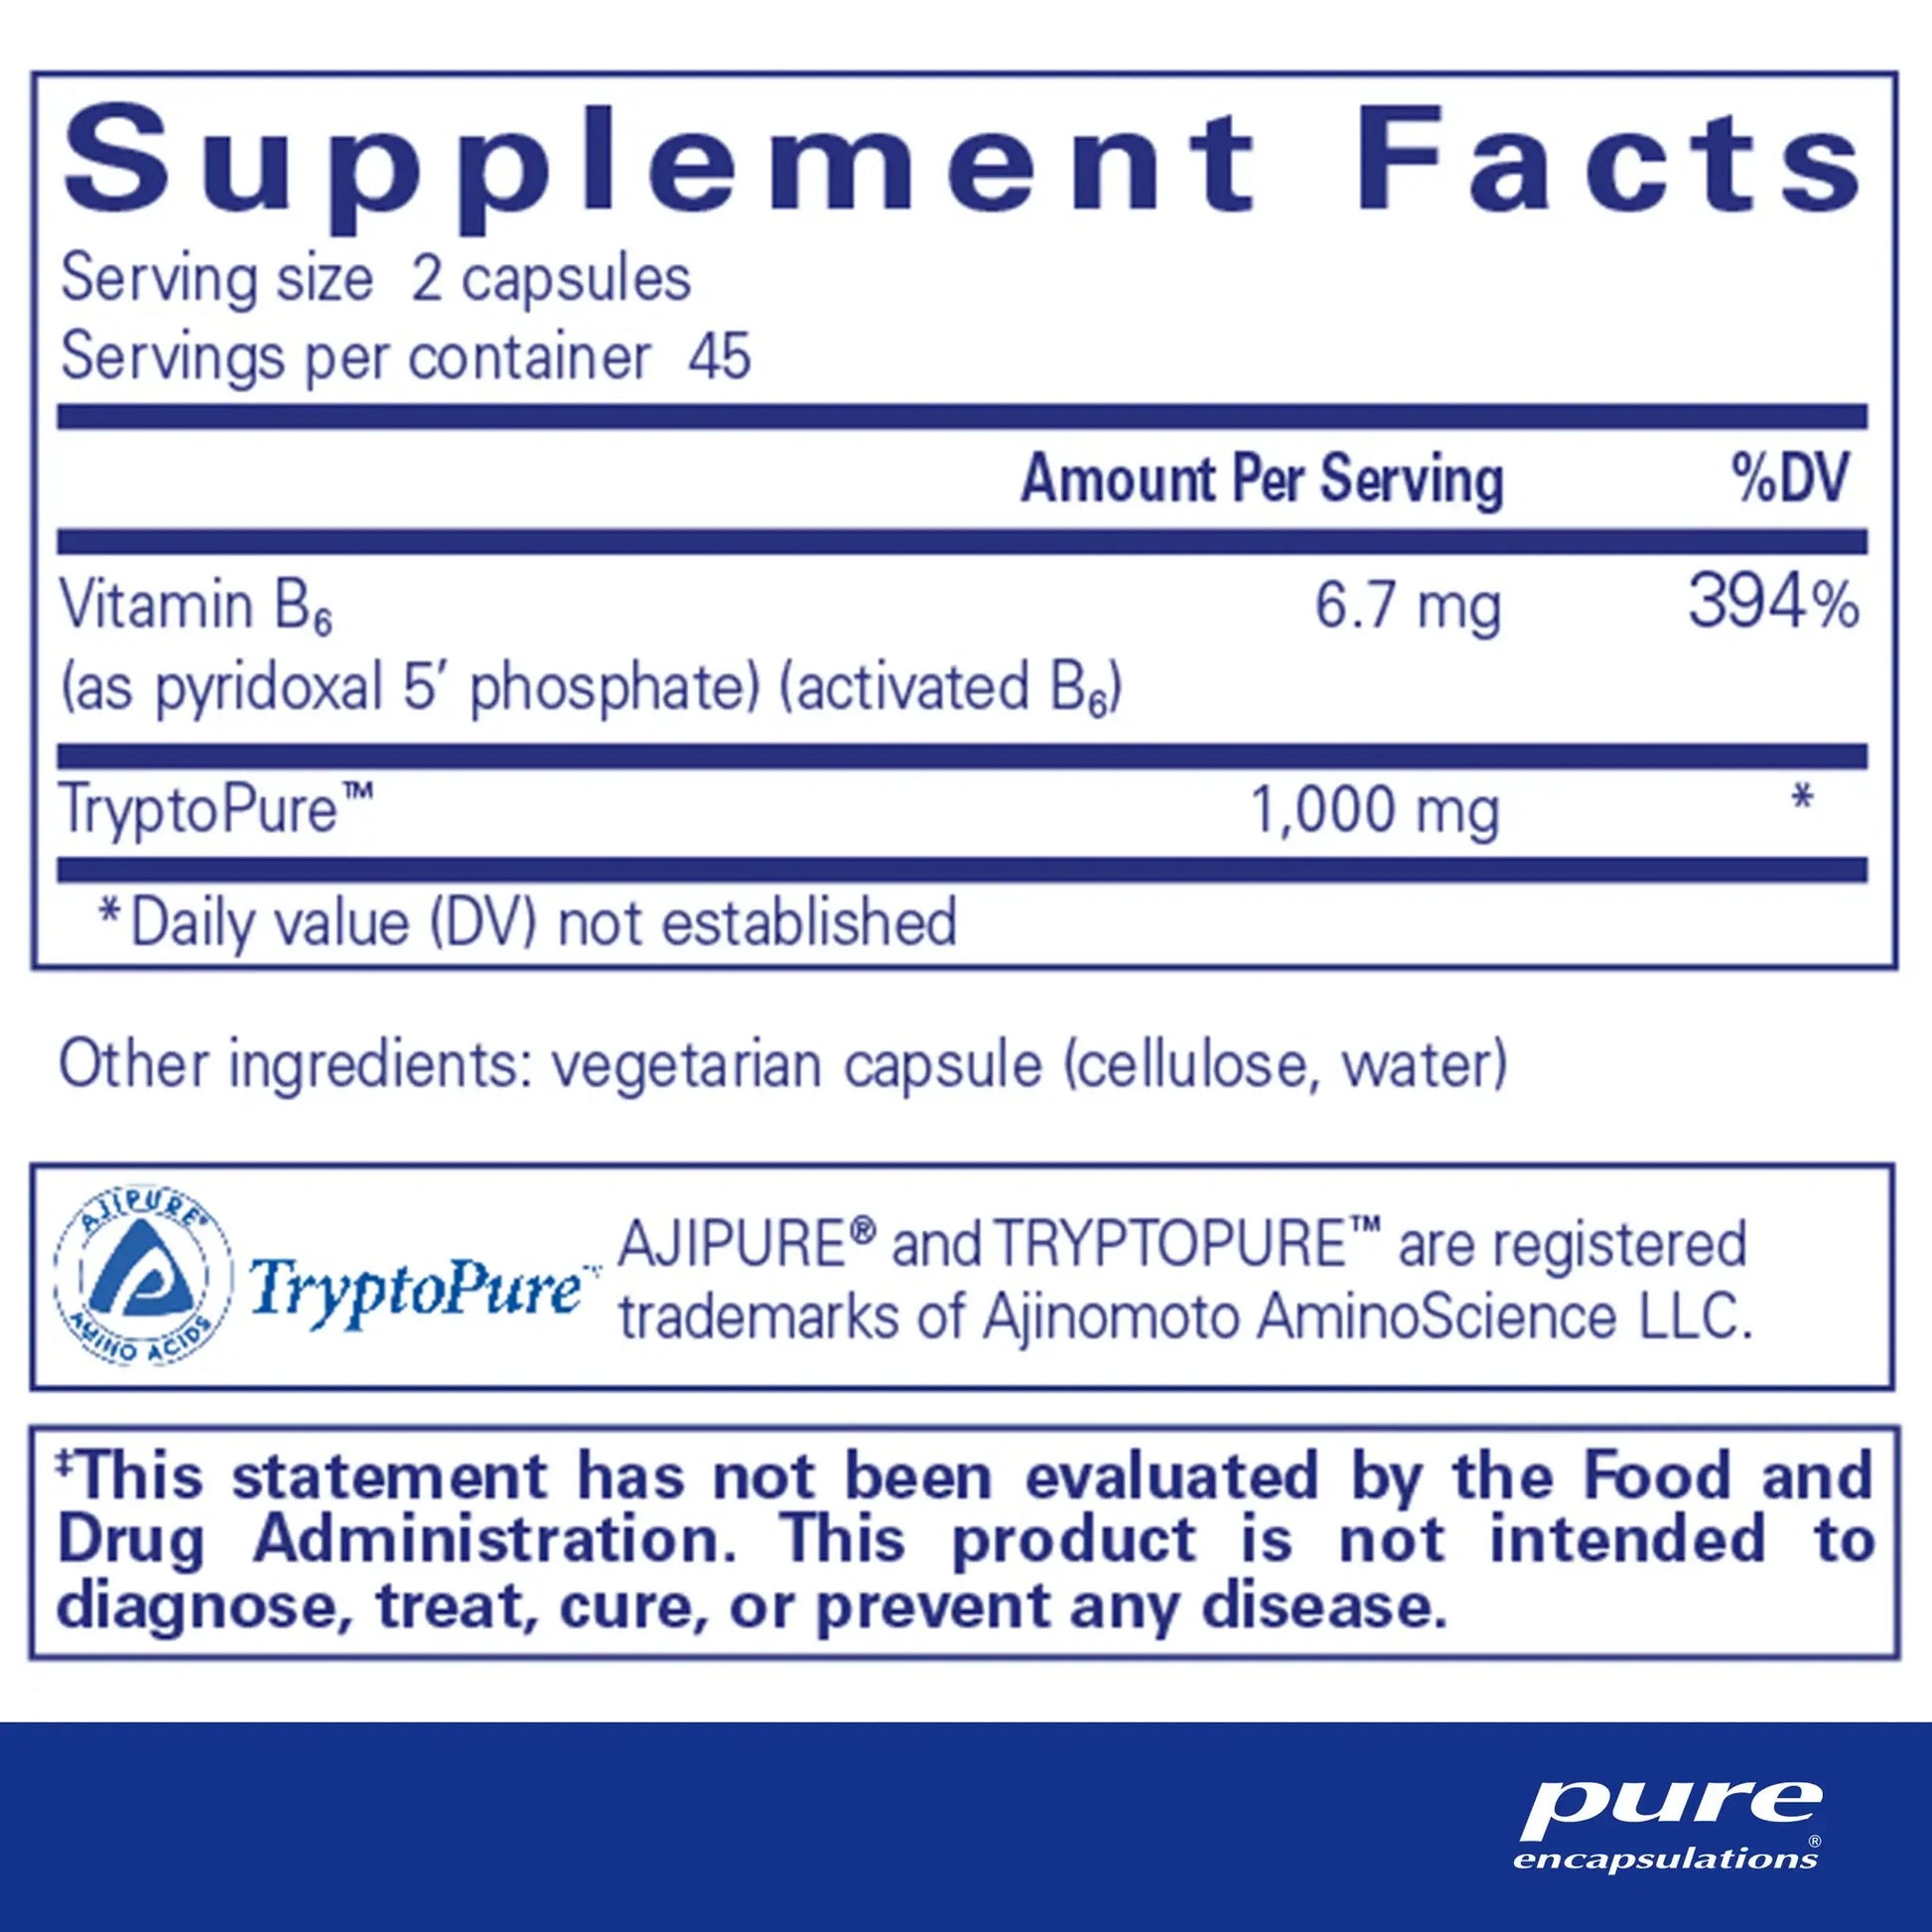 Pure Encapsulations L-Tryptophan Capsules